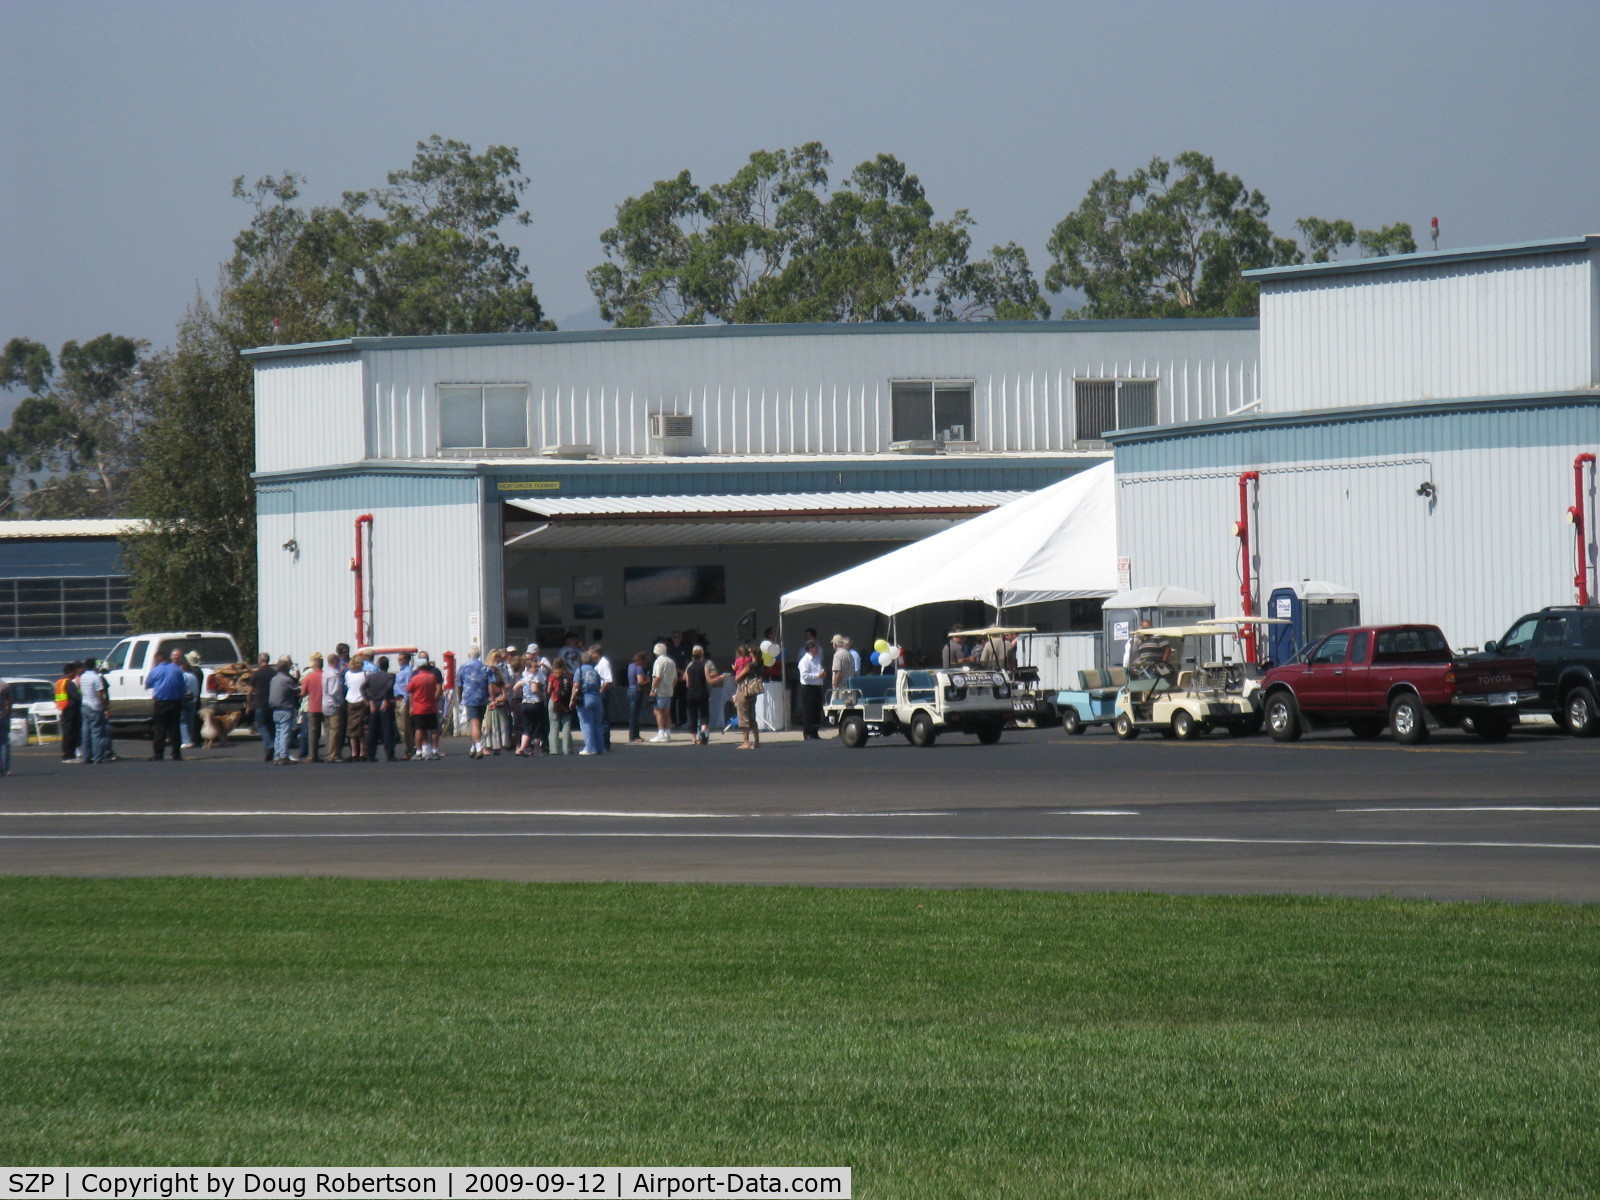 Santa Paula Airport (SZP) - Vicki Cruse Memorial-over 300 in attendance